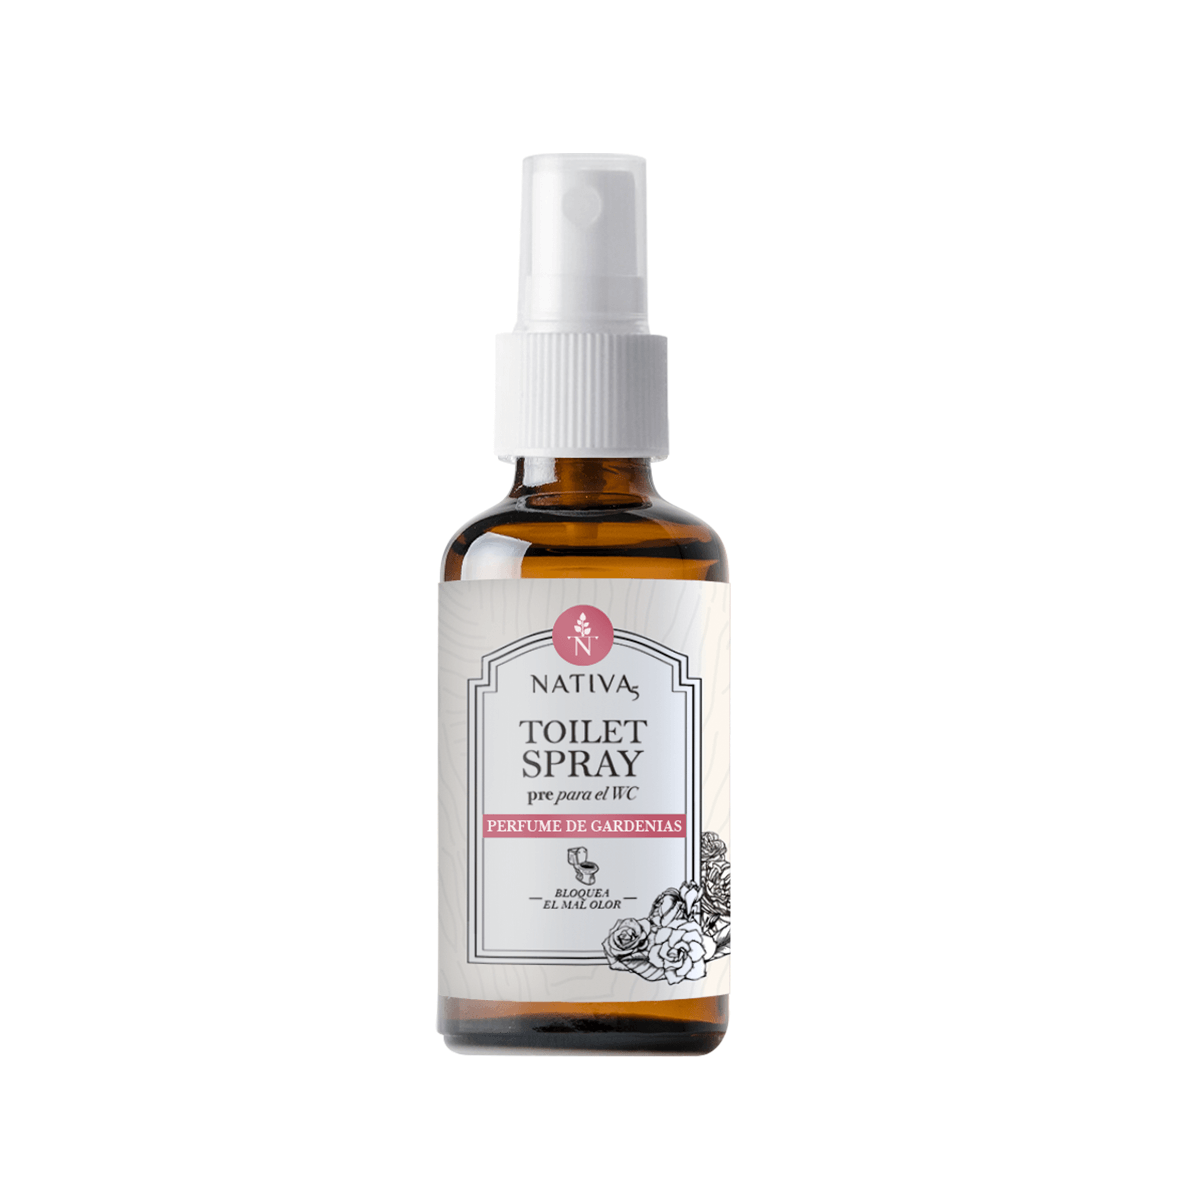 TOILET SPRAY - Aroma Perfume de Gardenias 50ml. Elimina el mal olor del WC.